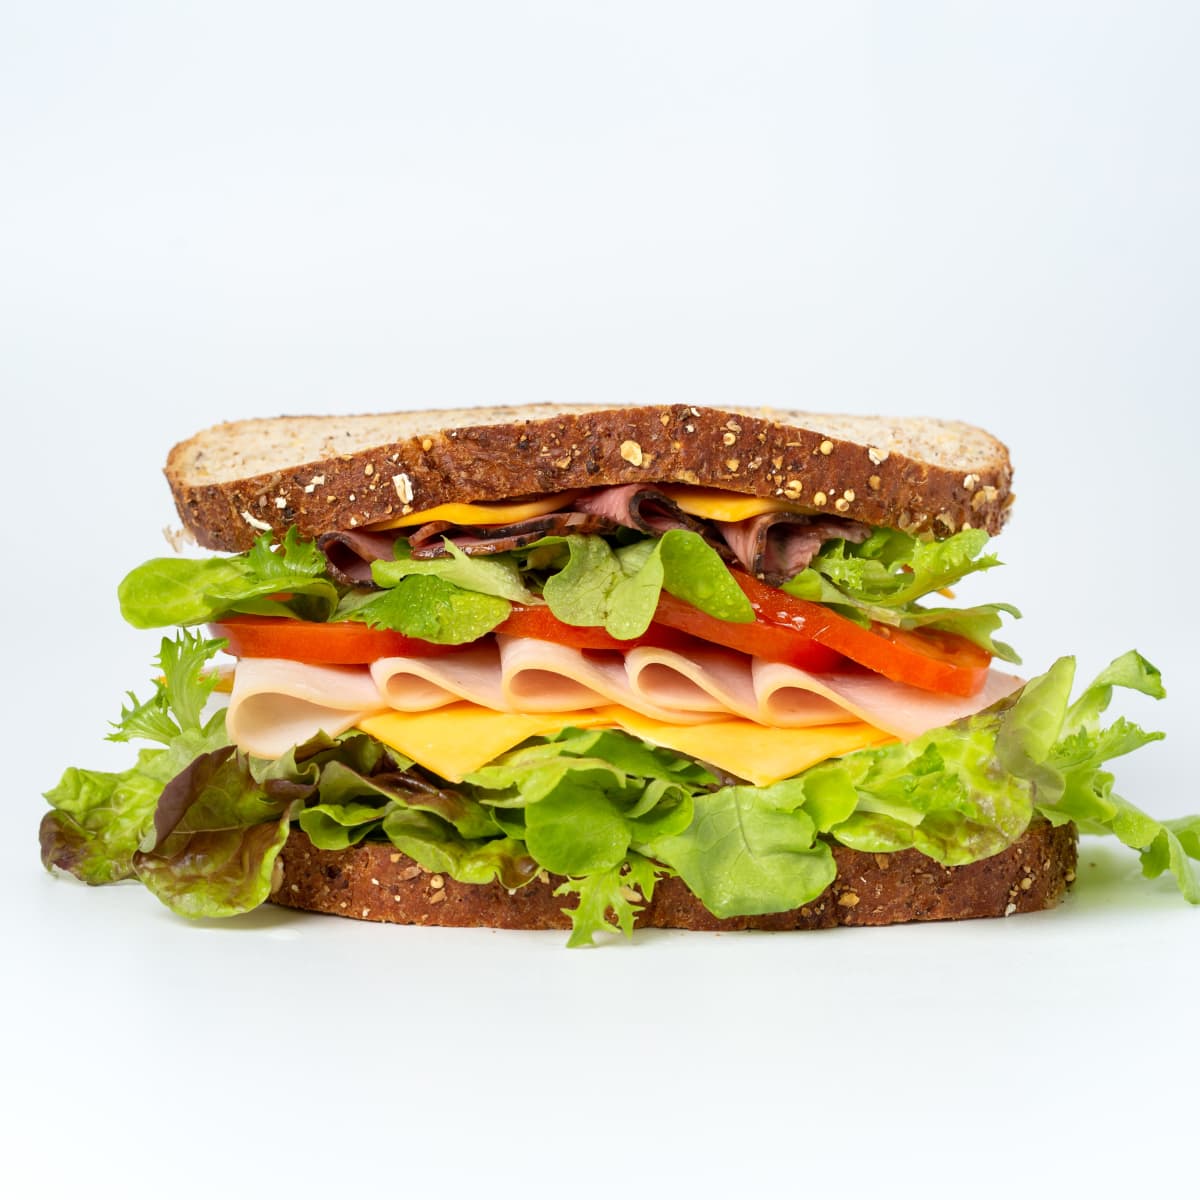 How to make a 'Cut-Open' Sandwich